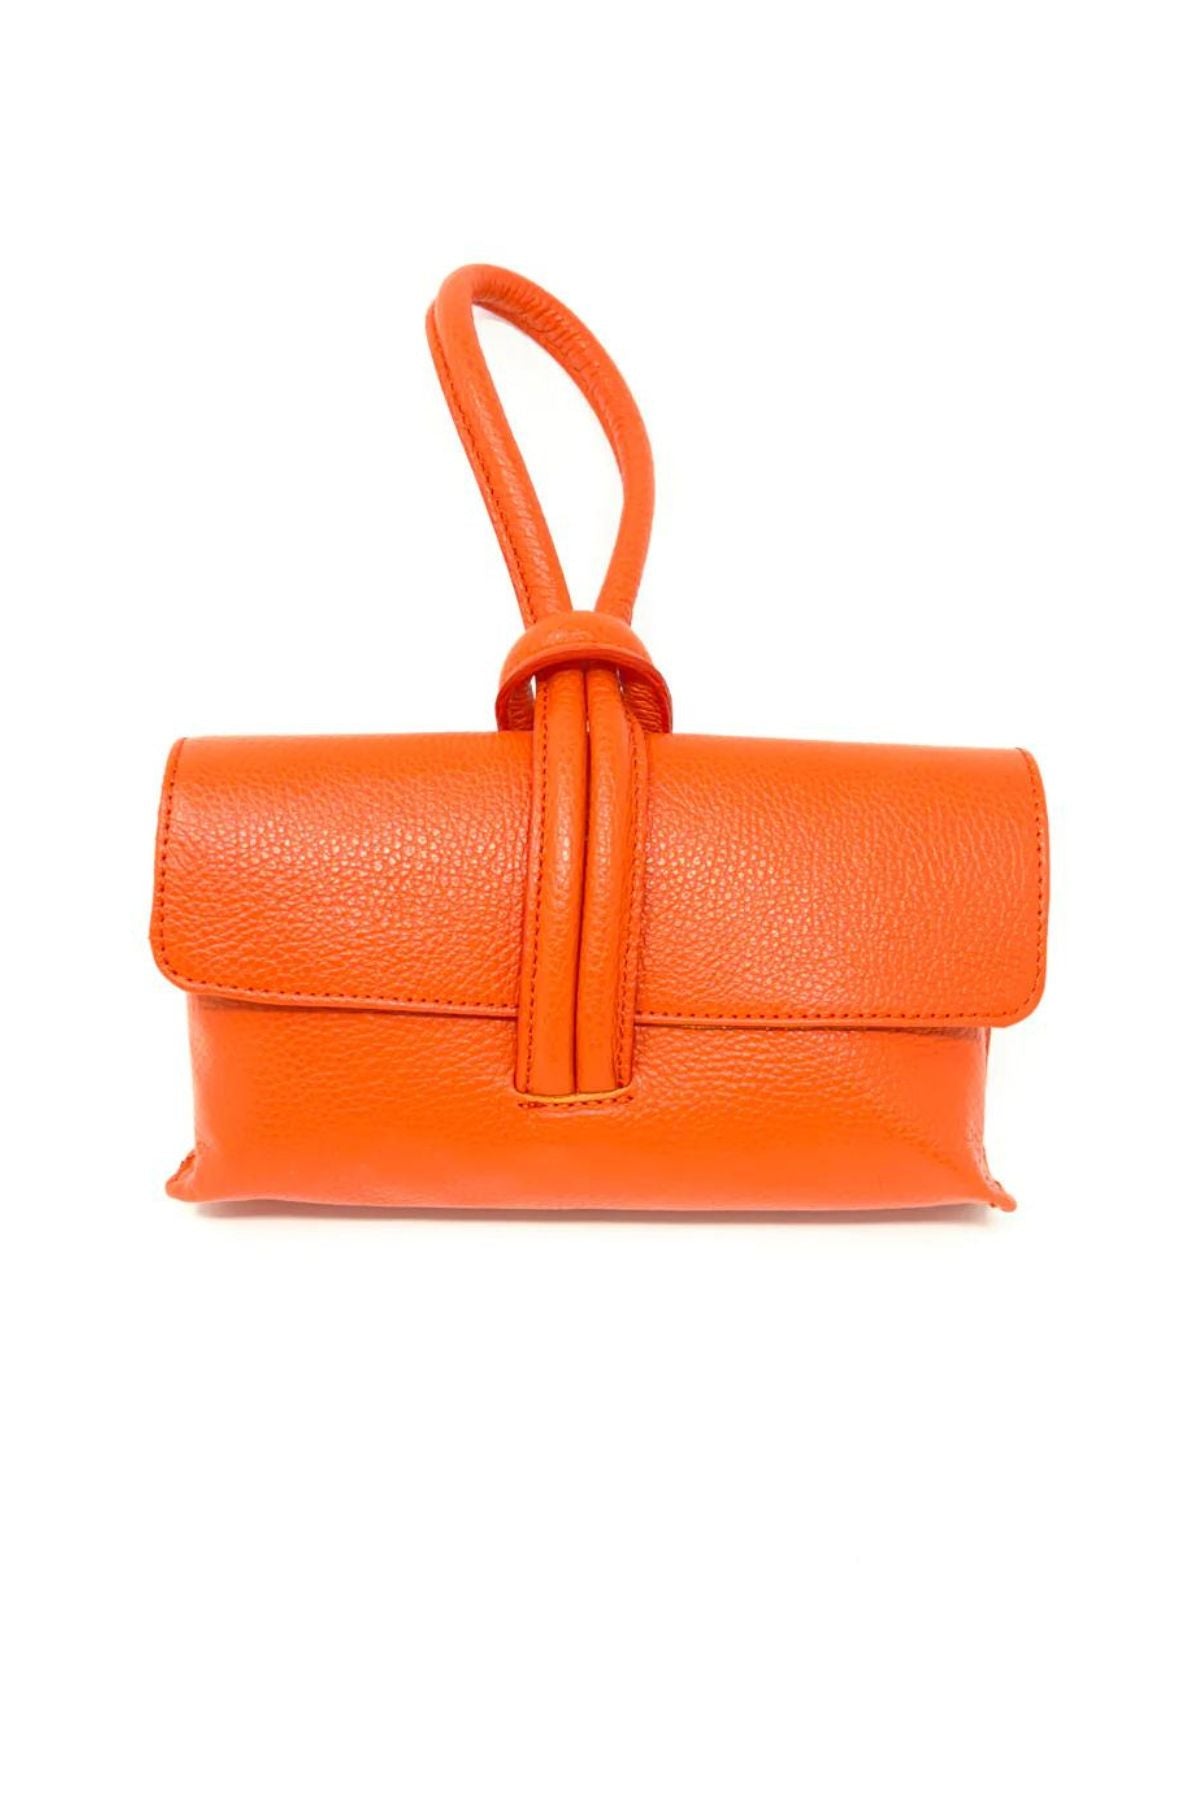 Orange wristlet leather bag